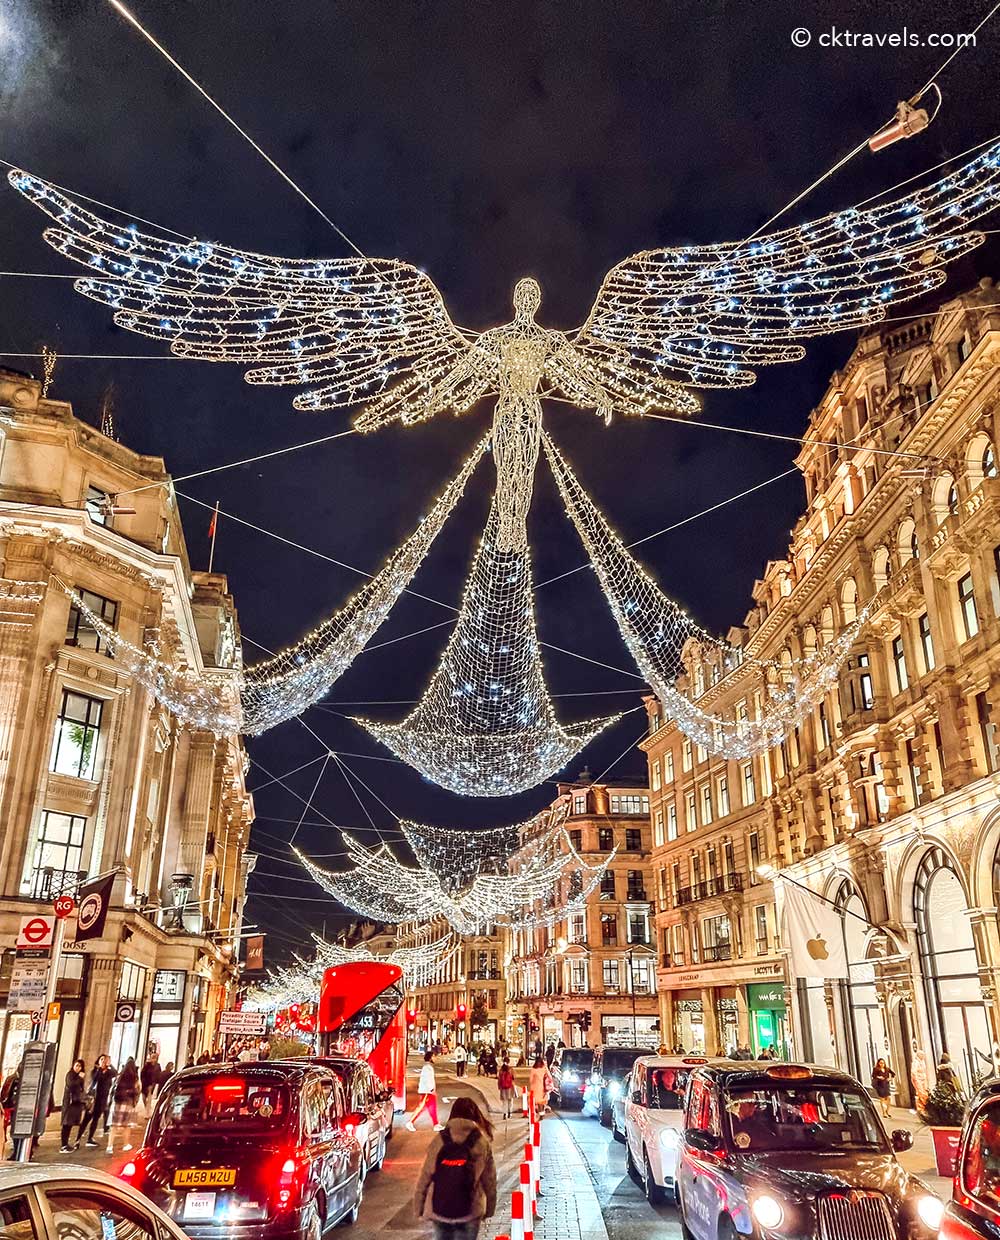 The Oxford Street Christmas Lights Return Tomorrow